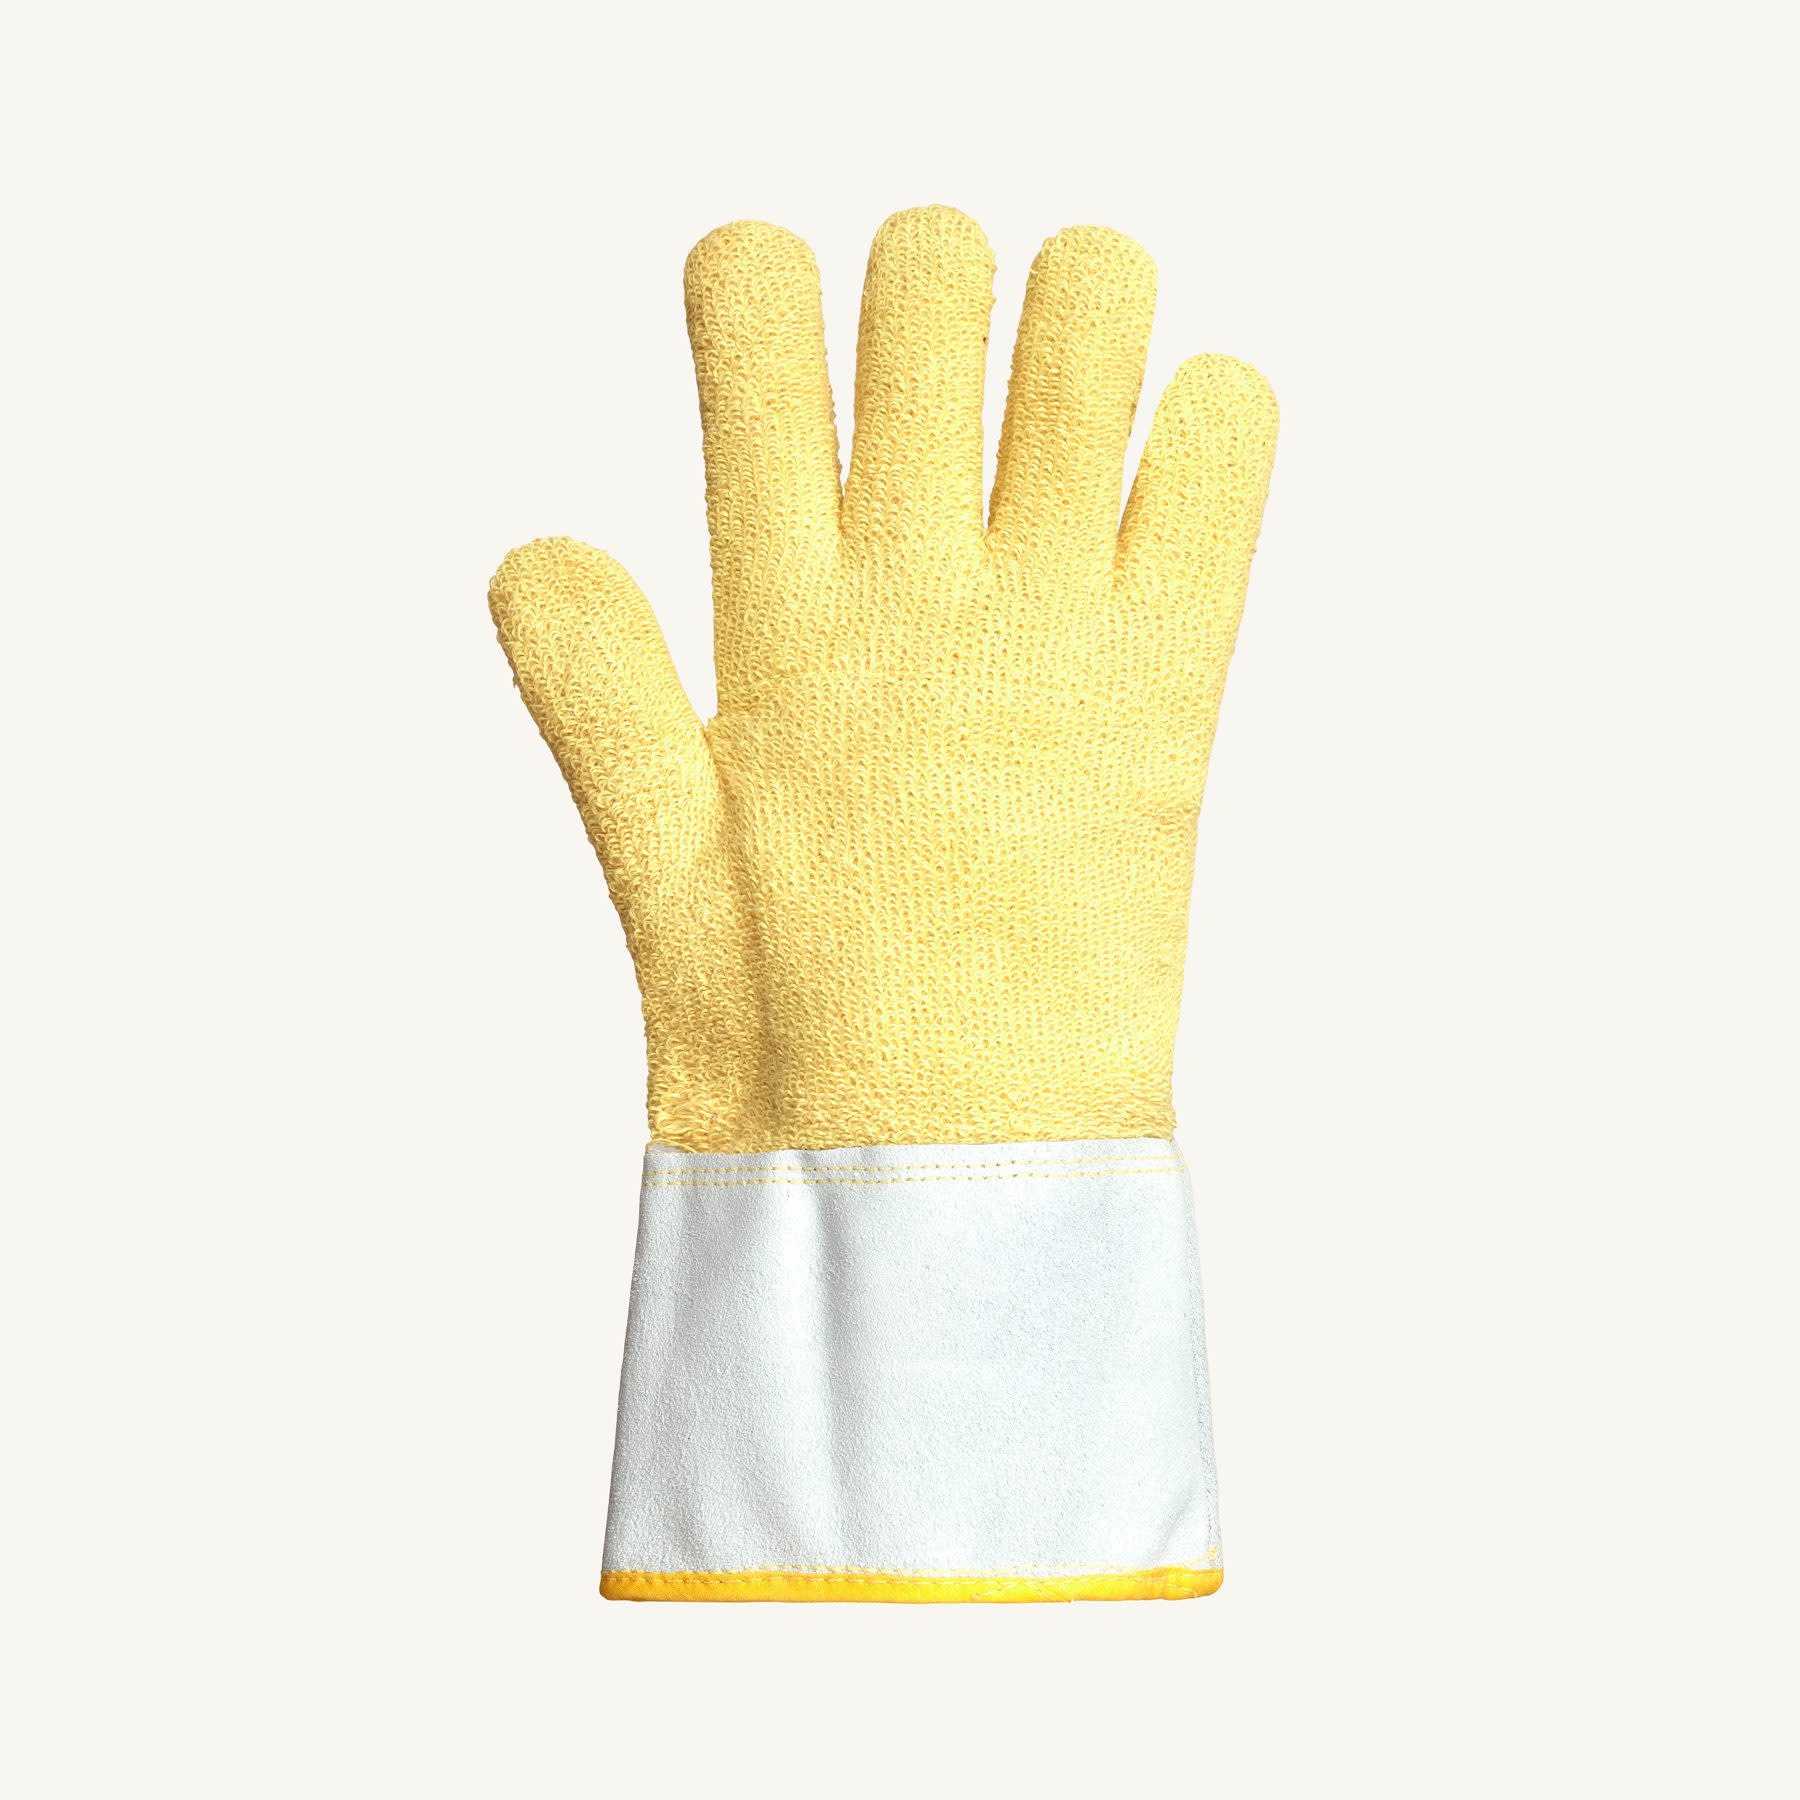 Superior Glove "Dragon" High Temperature Gloves